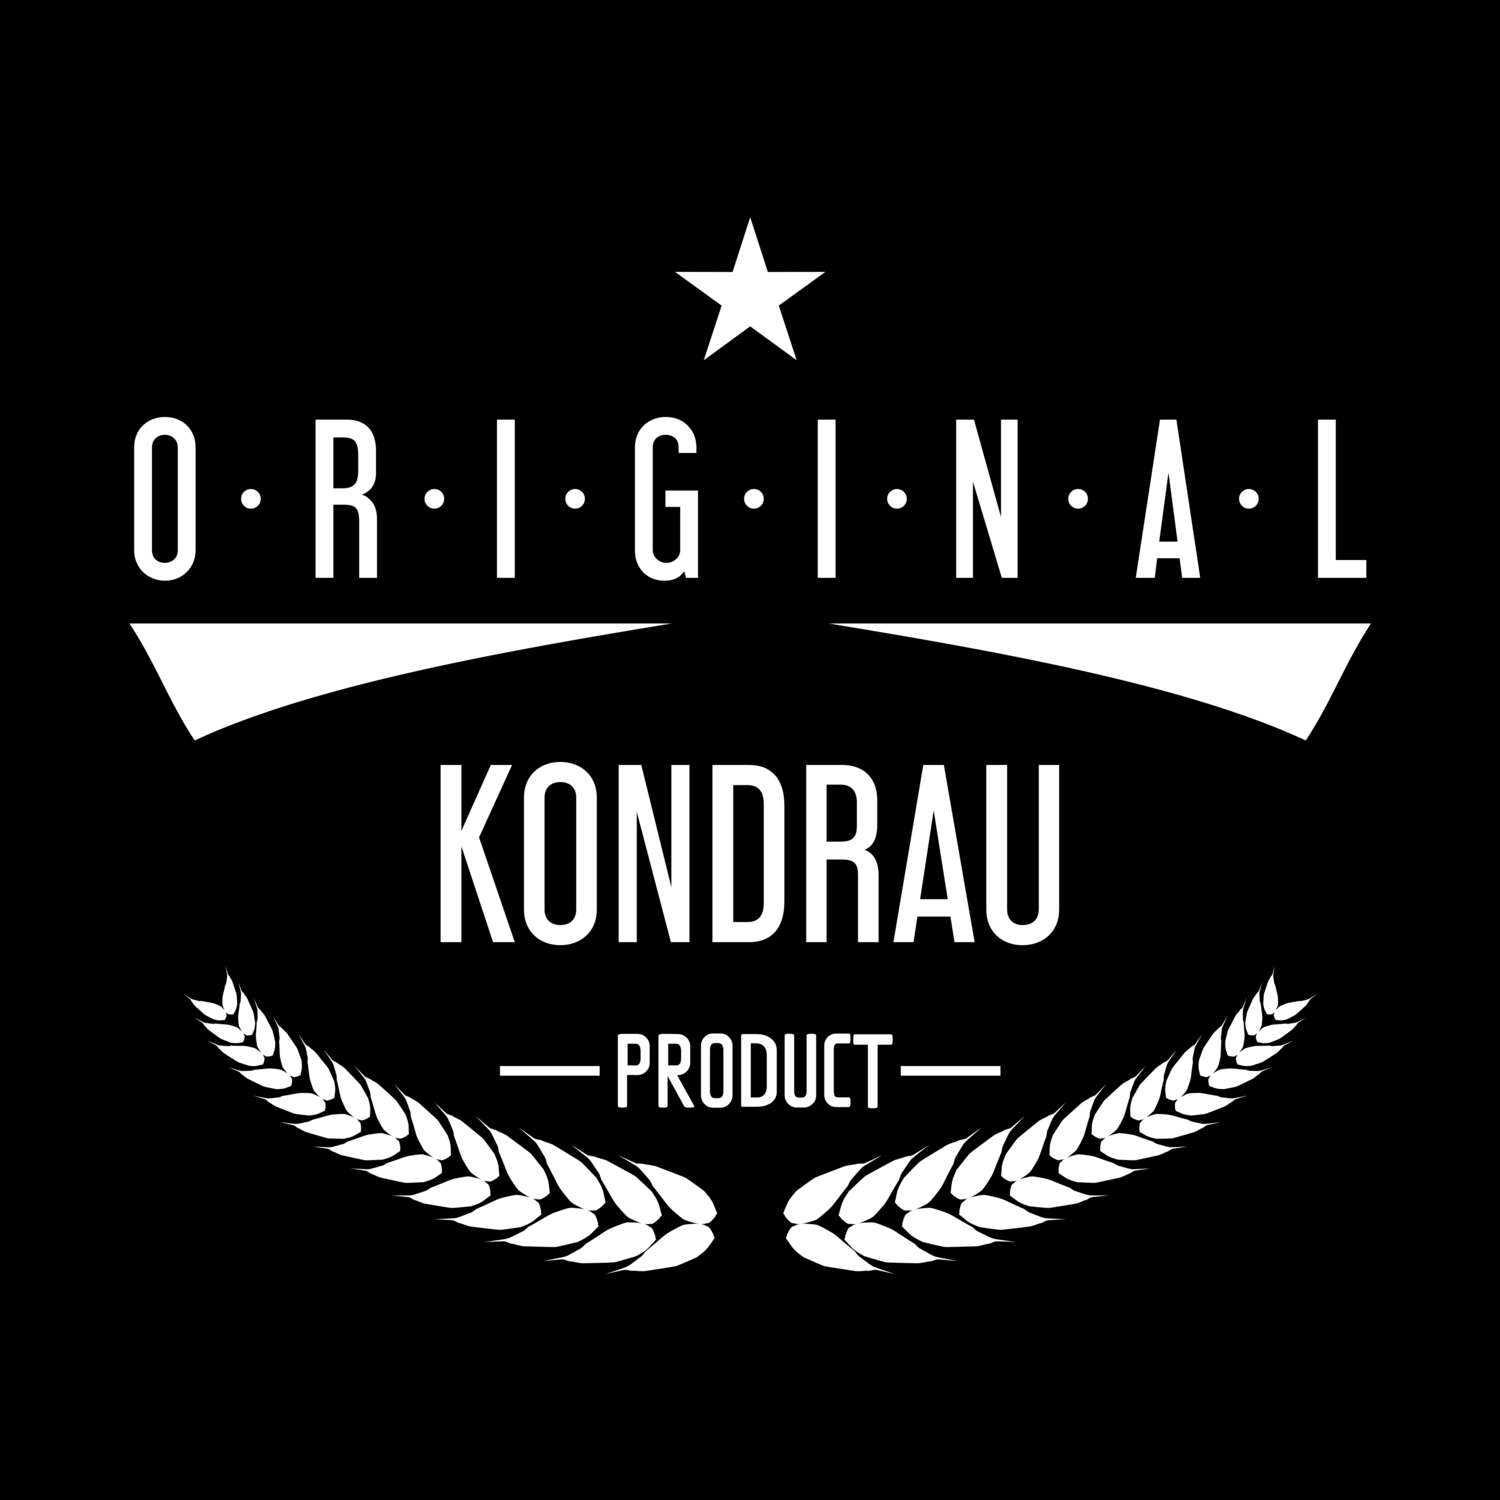 Kondrau T-Shirt »Original Product«